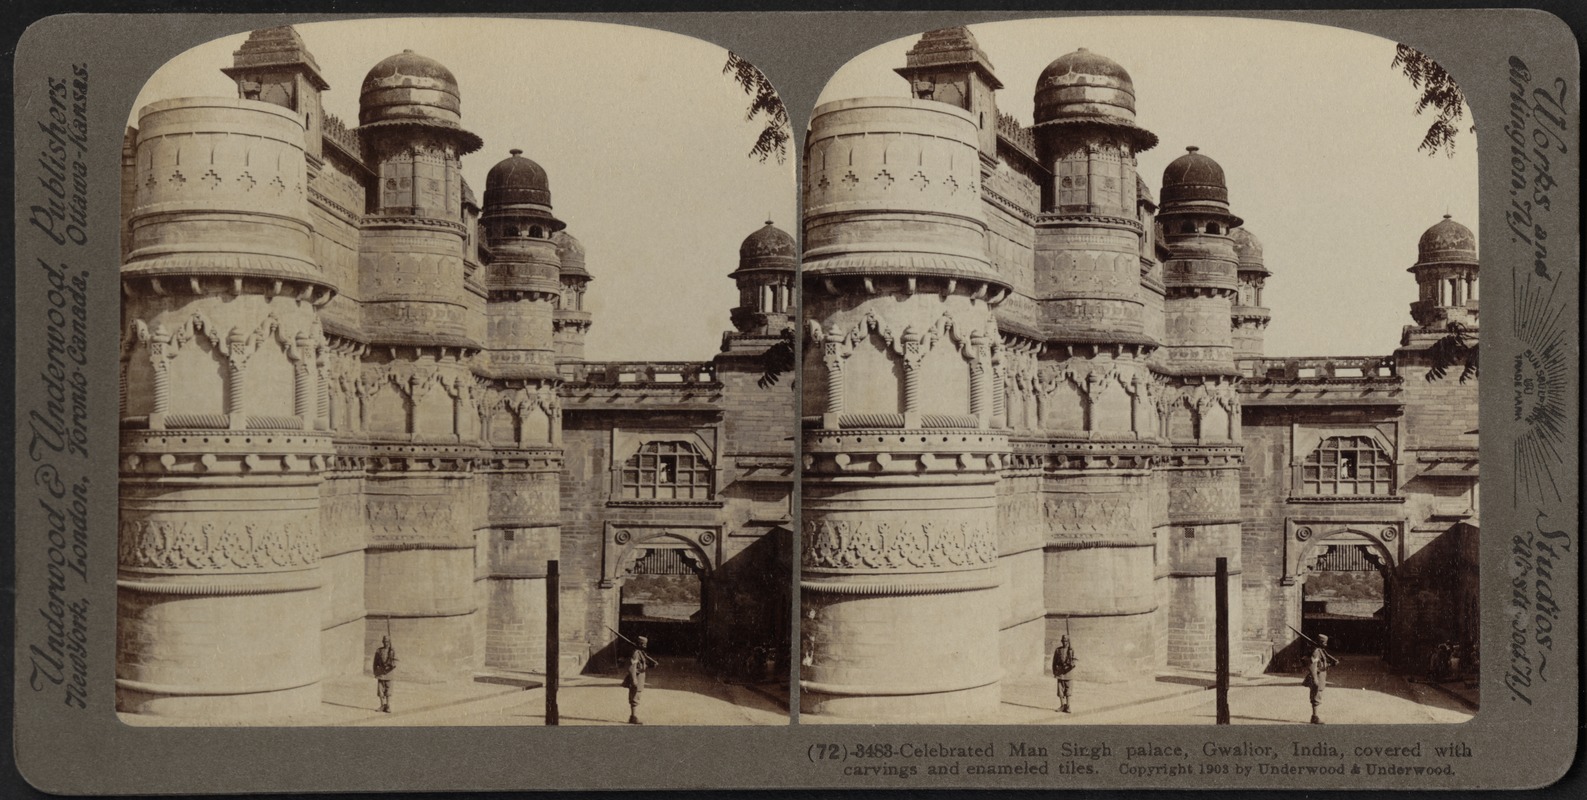 Celebrated Man Singh Palace, Gwalior, India